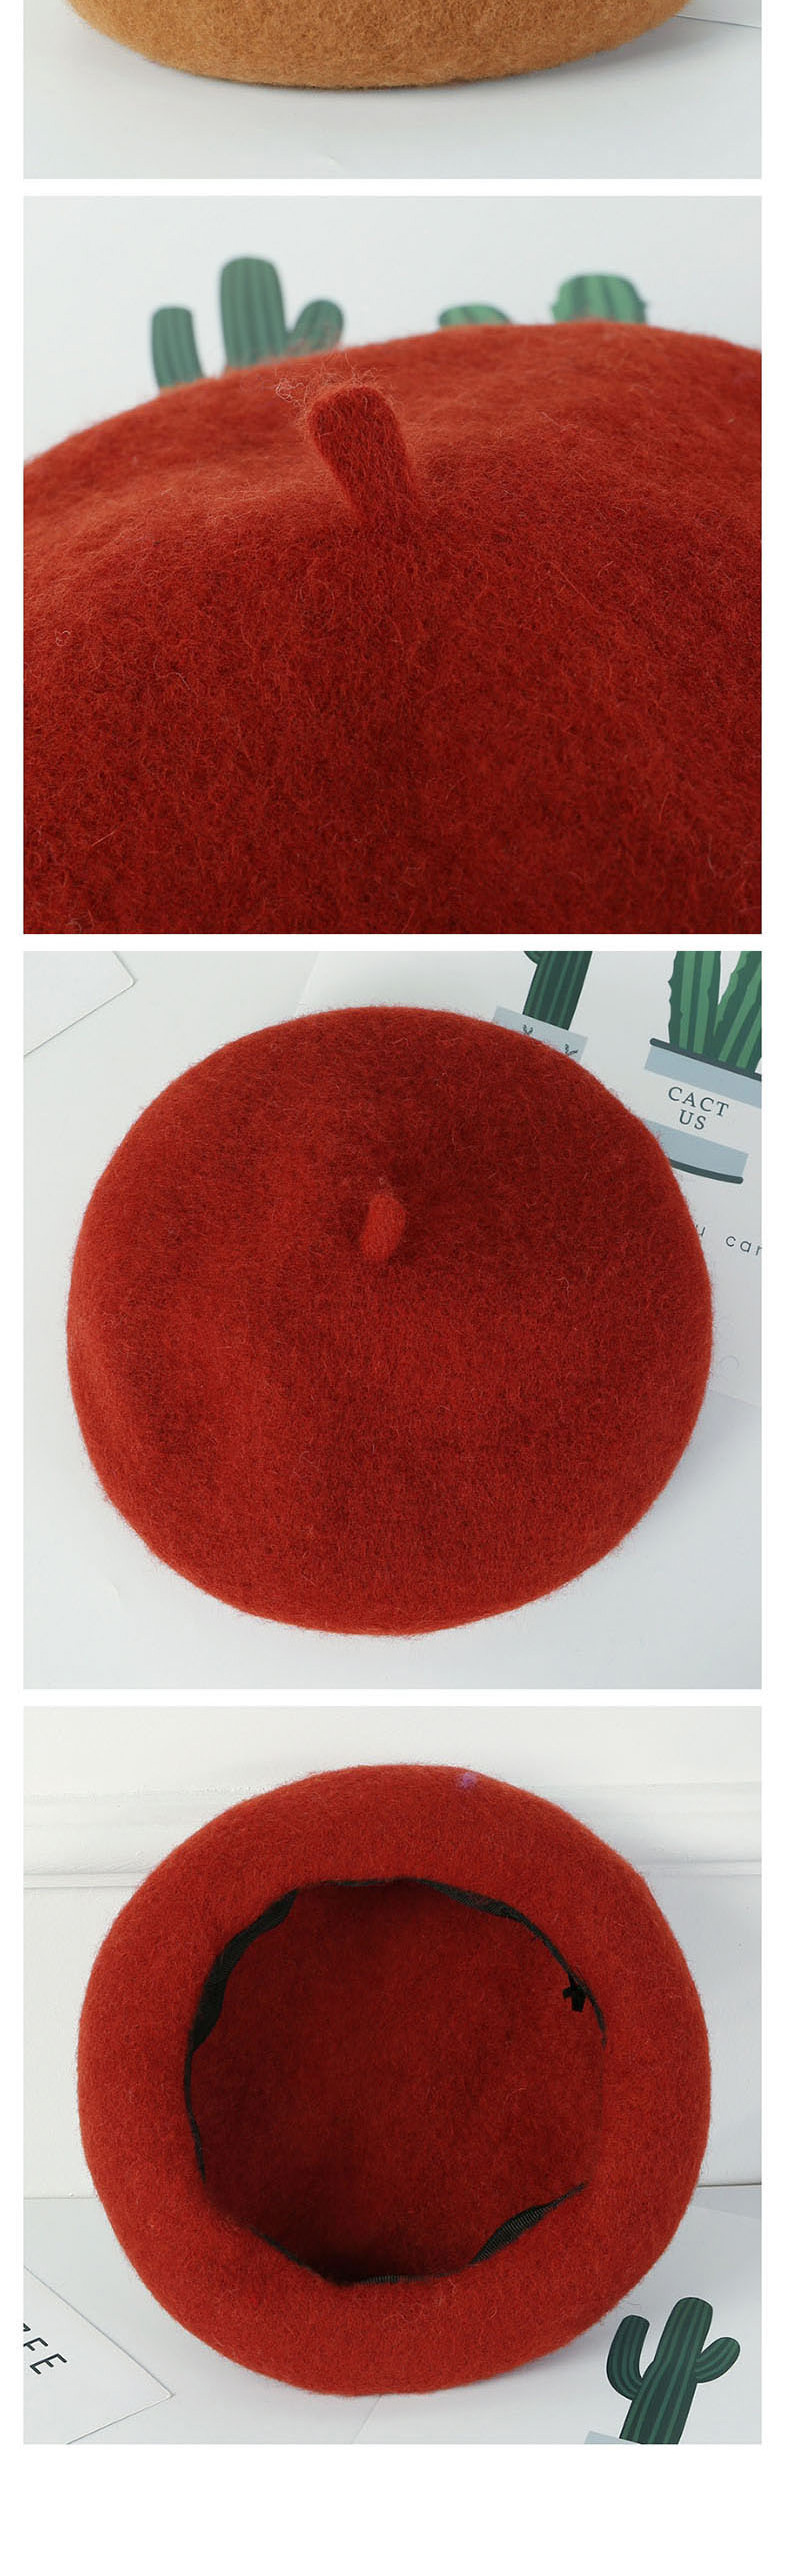 Fashion Korean Powder Woolen Beret,Sun Hats